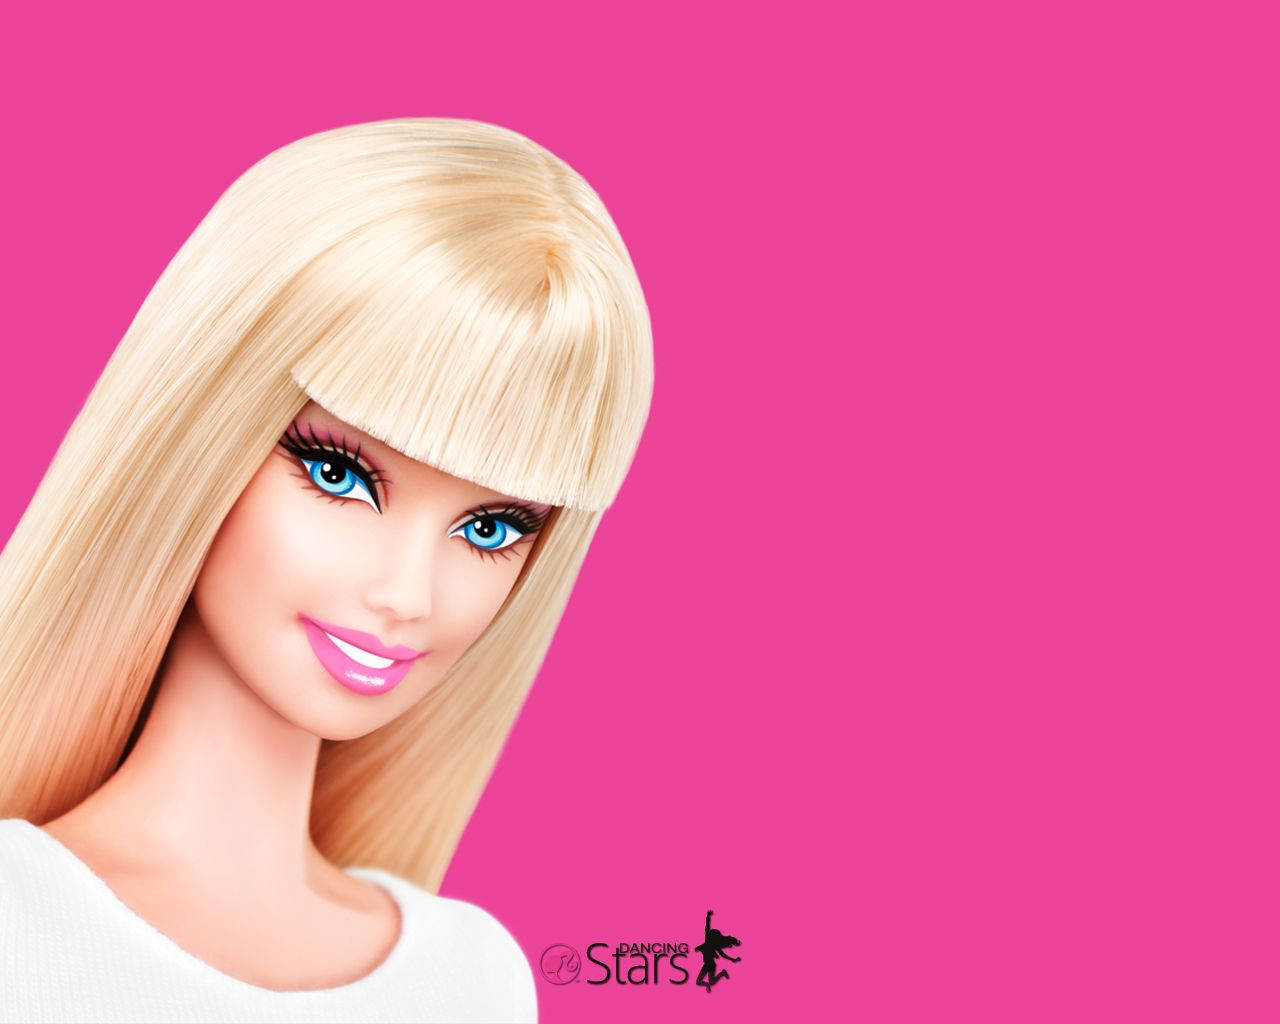 Blonde Barbie With Bangs Wallpaper